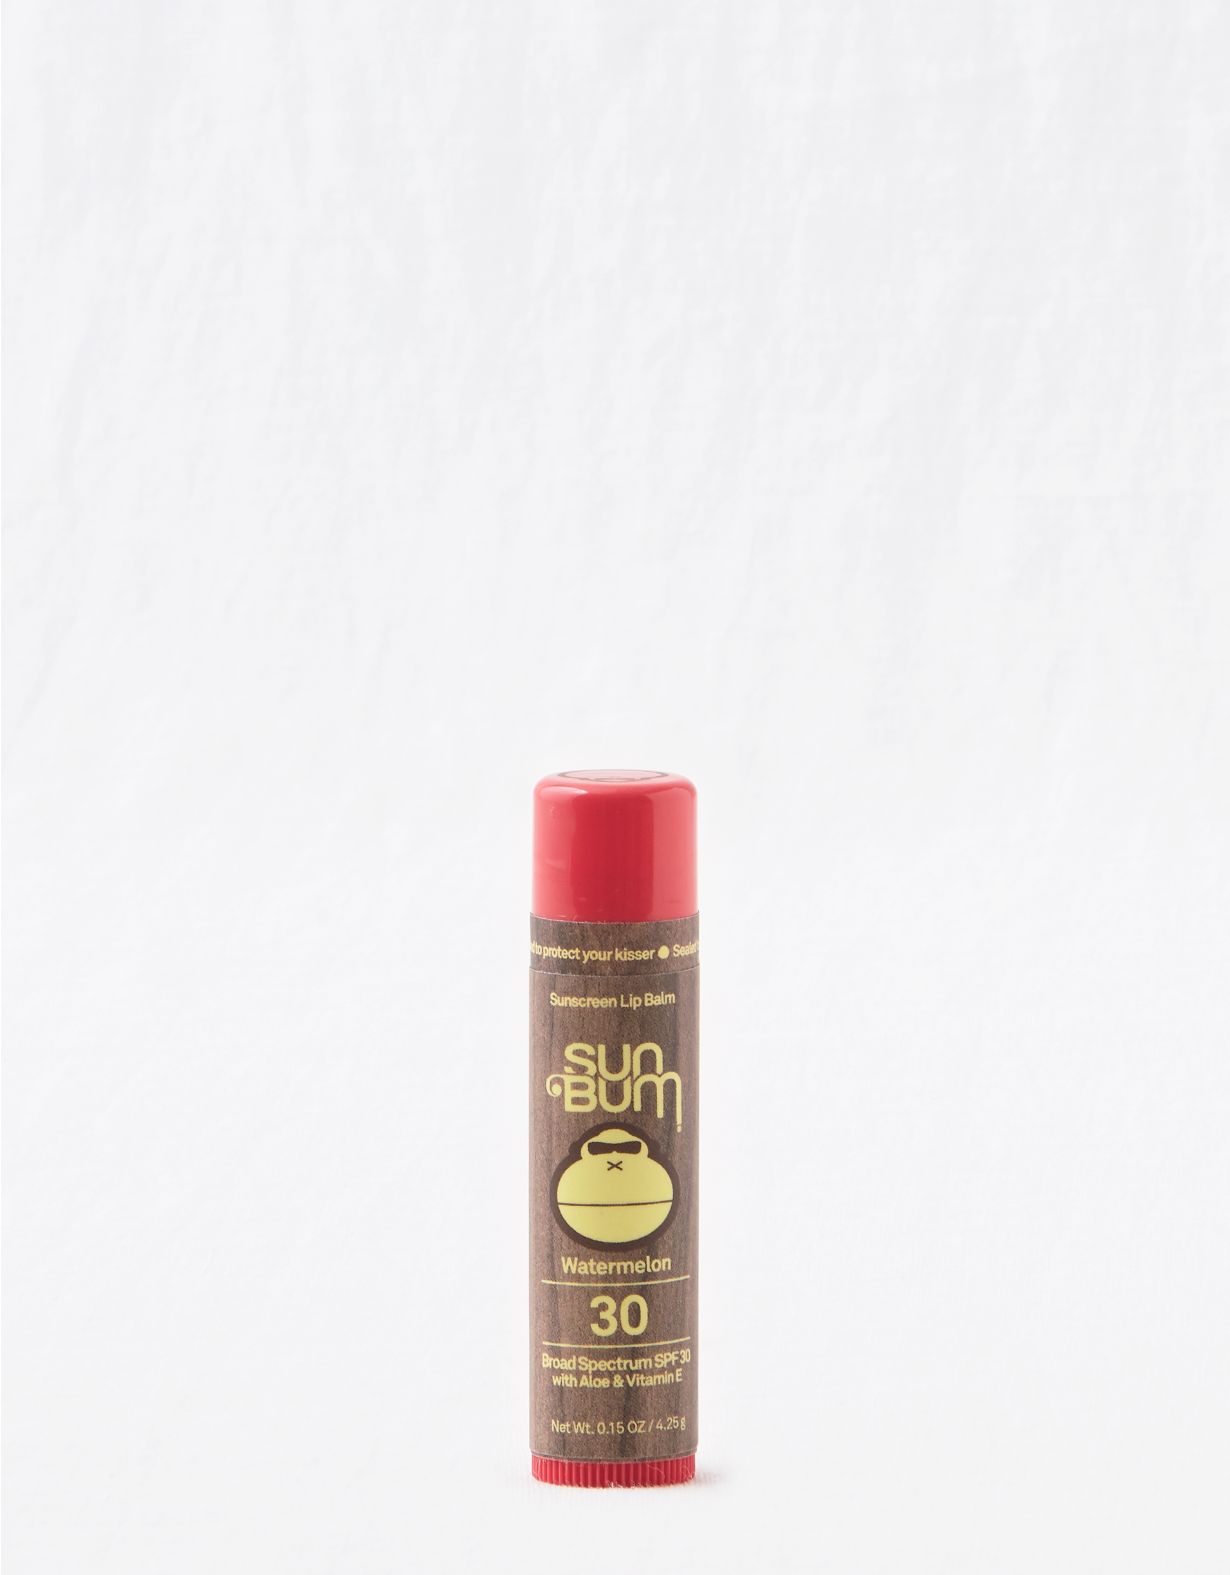 Sun Bum Original Sunscreen Lip Balm - SPF 30